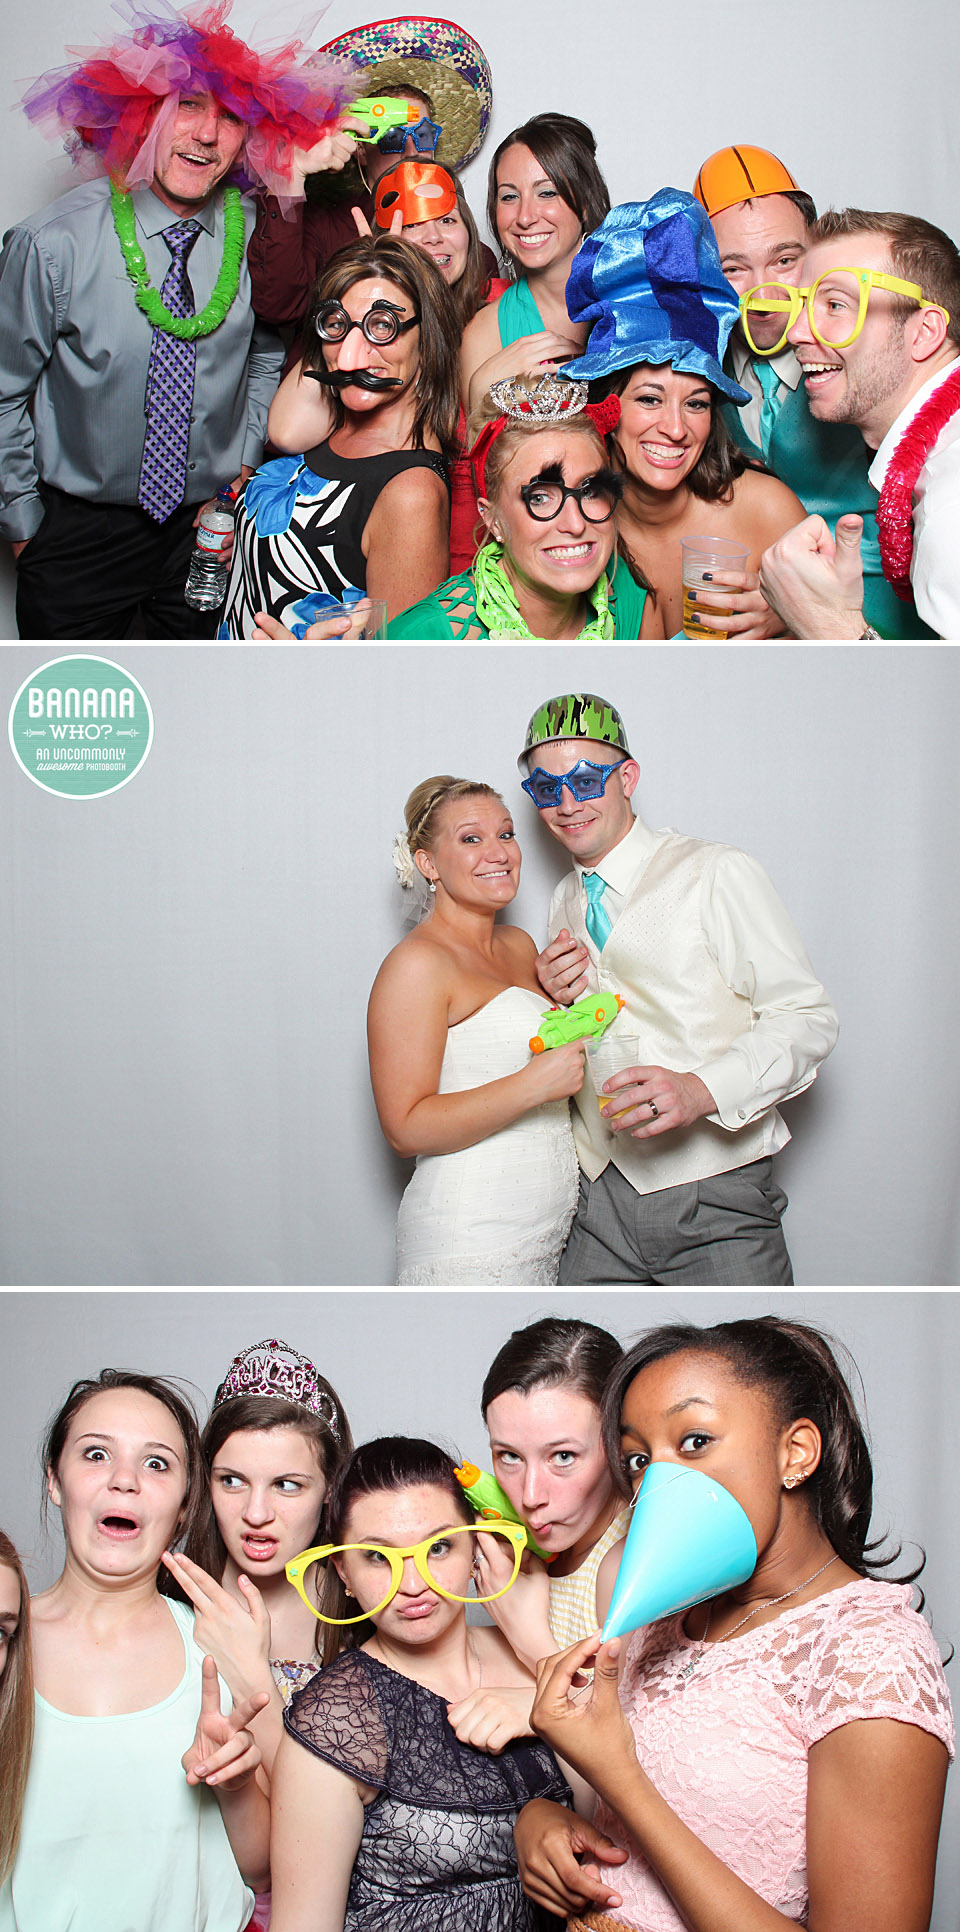 Amy and Mark, Bride and groom, Banana Who? Booth, Kansas City venues, Sugar creek weddings